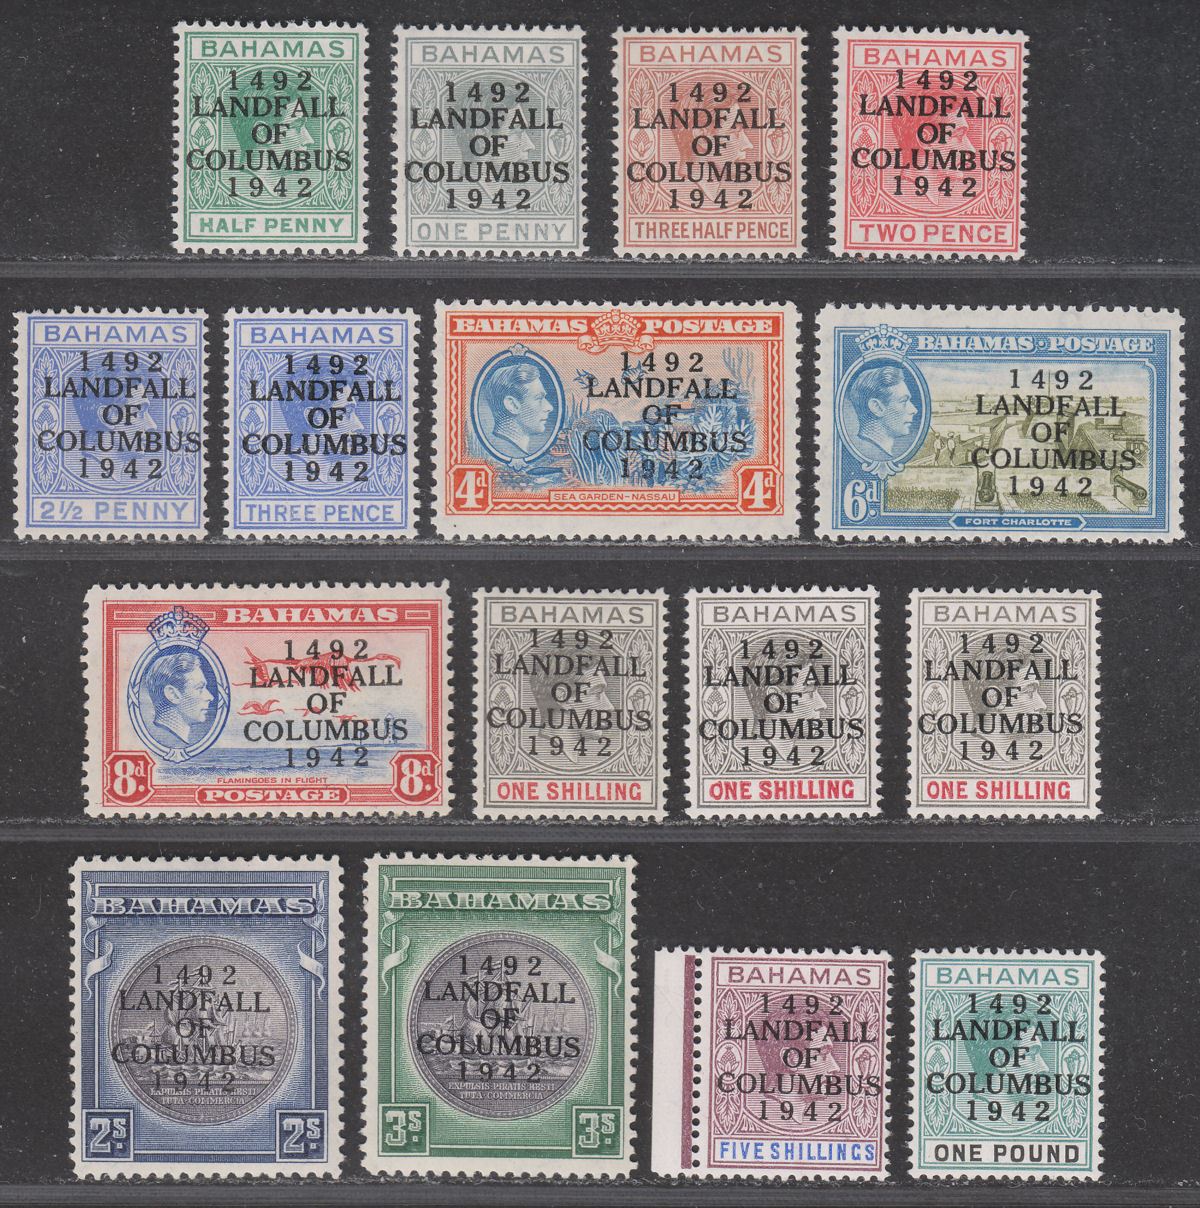 Bahamas 1942 KGVI Columbus Overprint Set Mint SG162-175a cat £80++